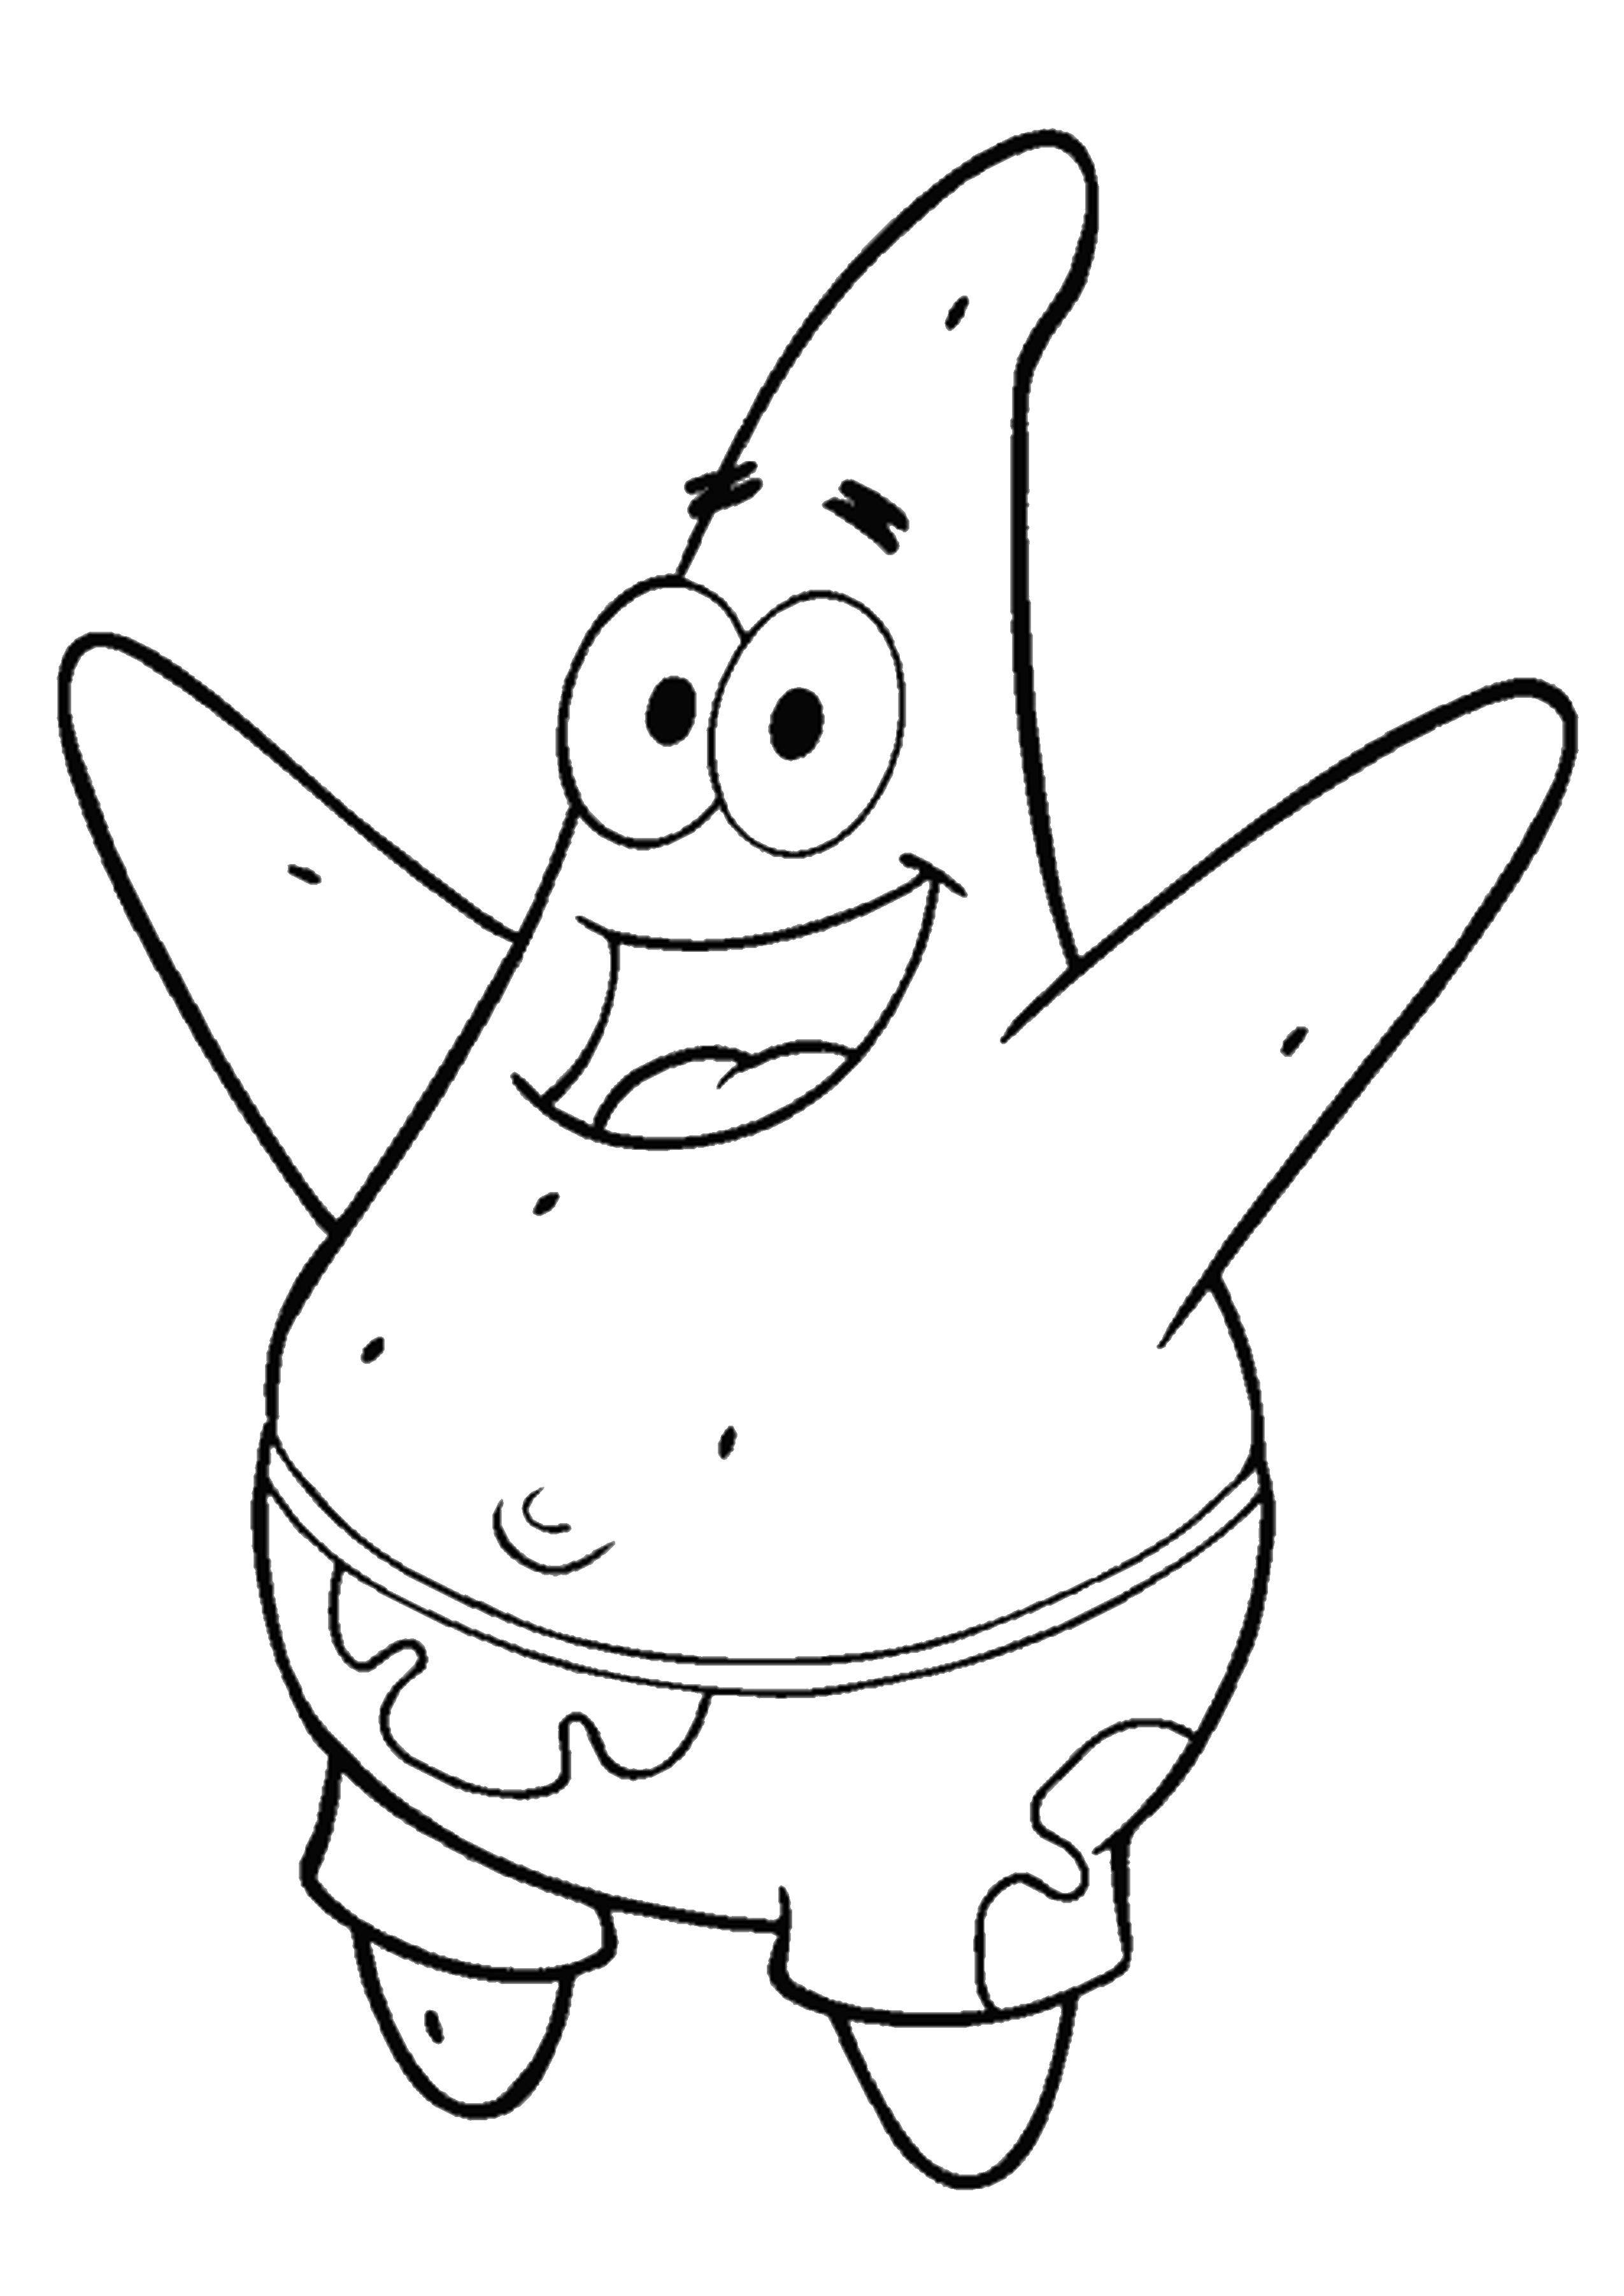 Coloring Patrick. Category Spongebob. Tags:  cartoon, Patrick, spongebob, cartoons.